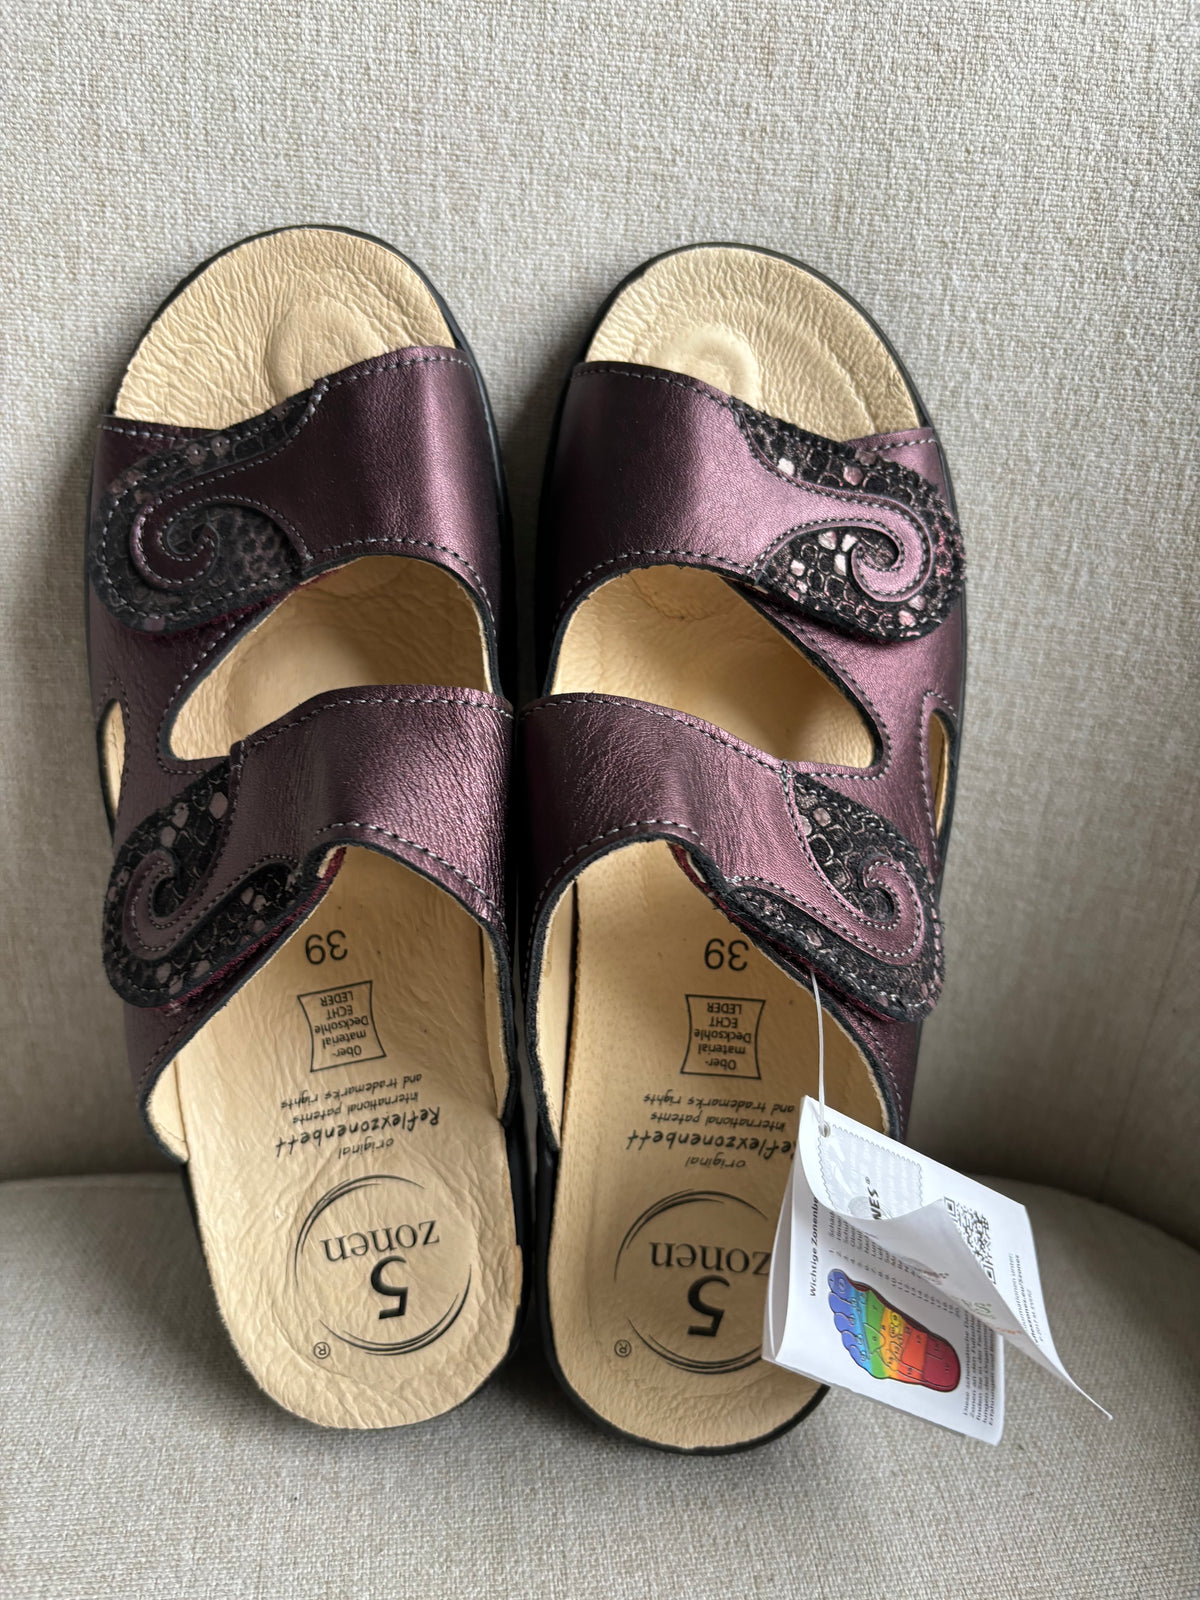 Handmade comfort sandals by Zonen5 Size 6 EU 39